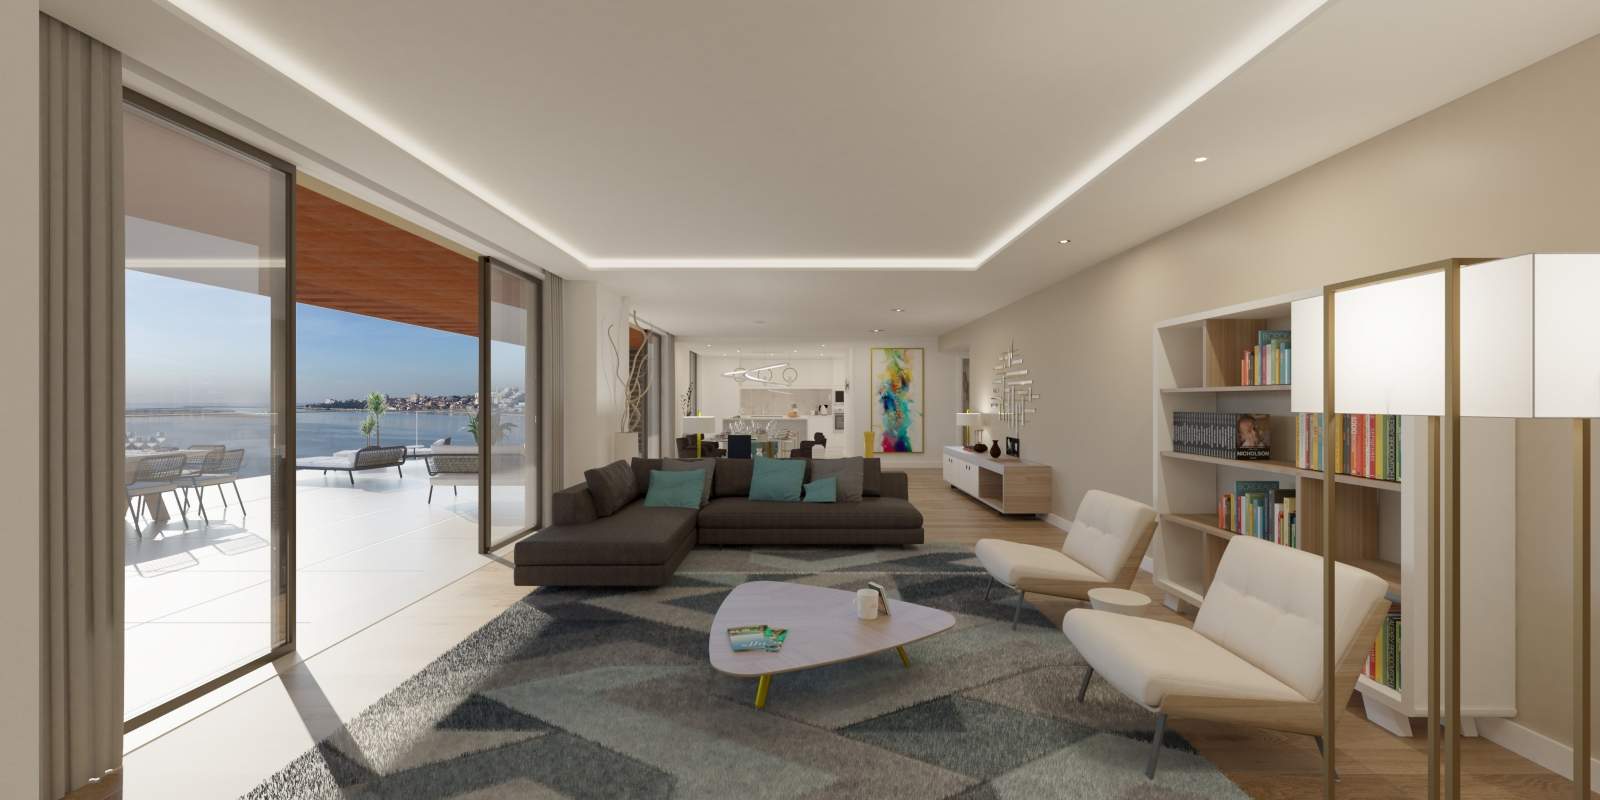 Apartment for sale with terrace, in exclusive condominium, V. N. Gaia, Porto, Portugal_175762